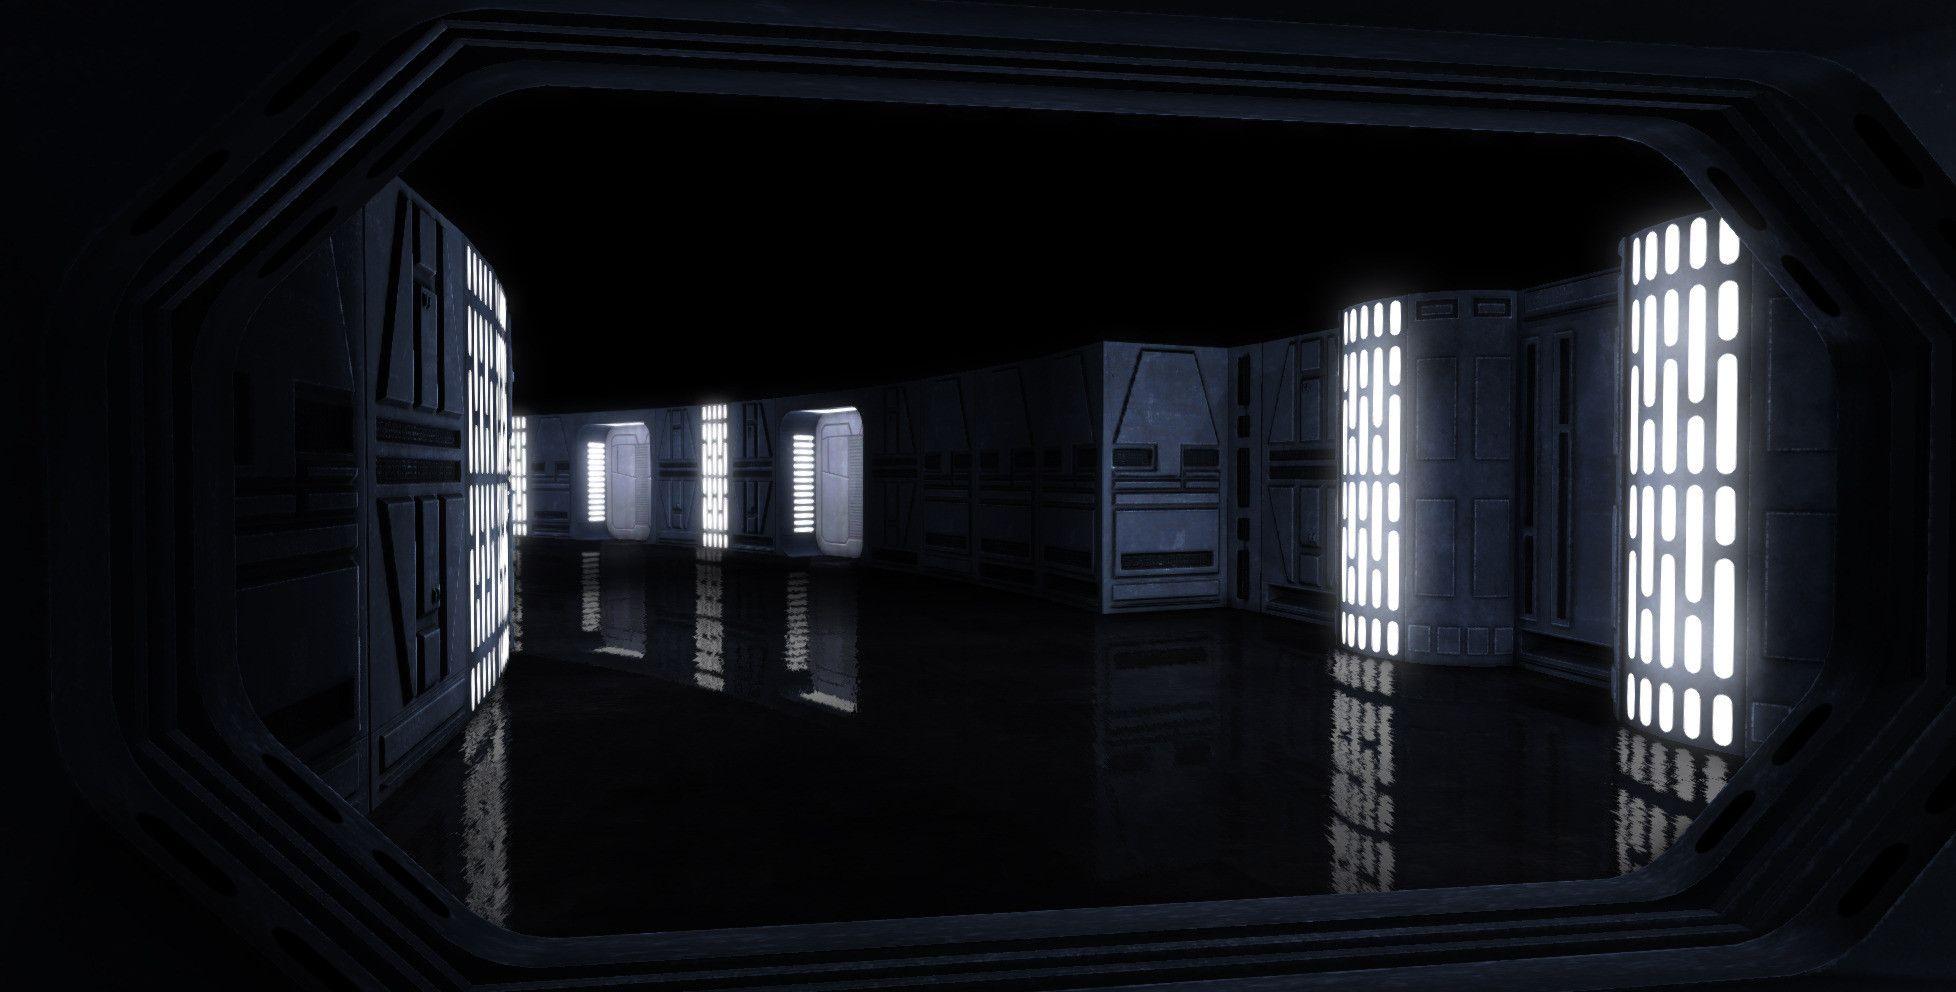 Death Star Announcement and Lightsaber Customization Concept news